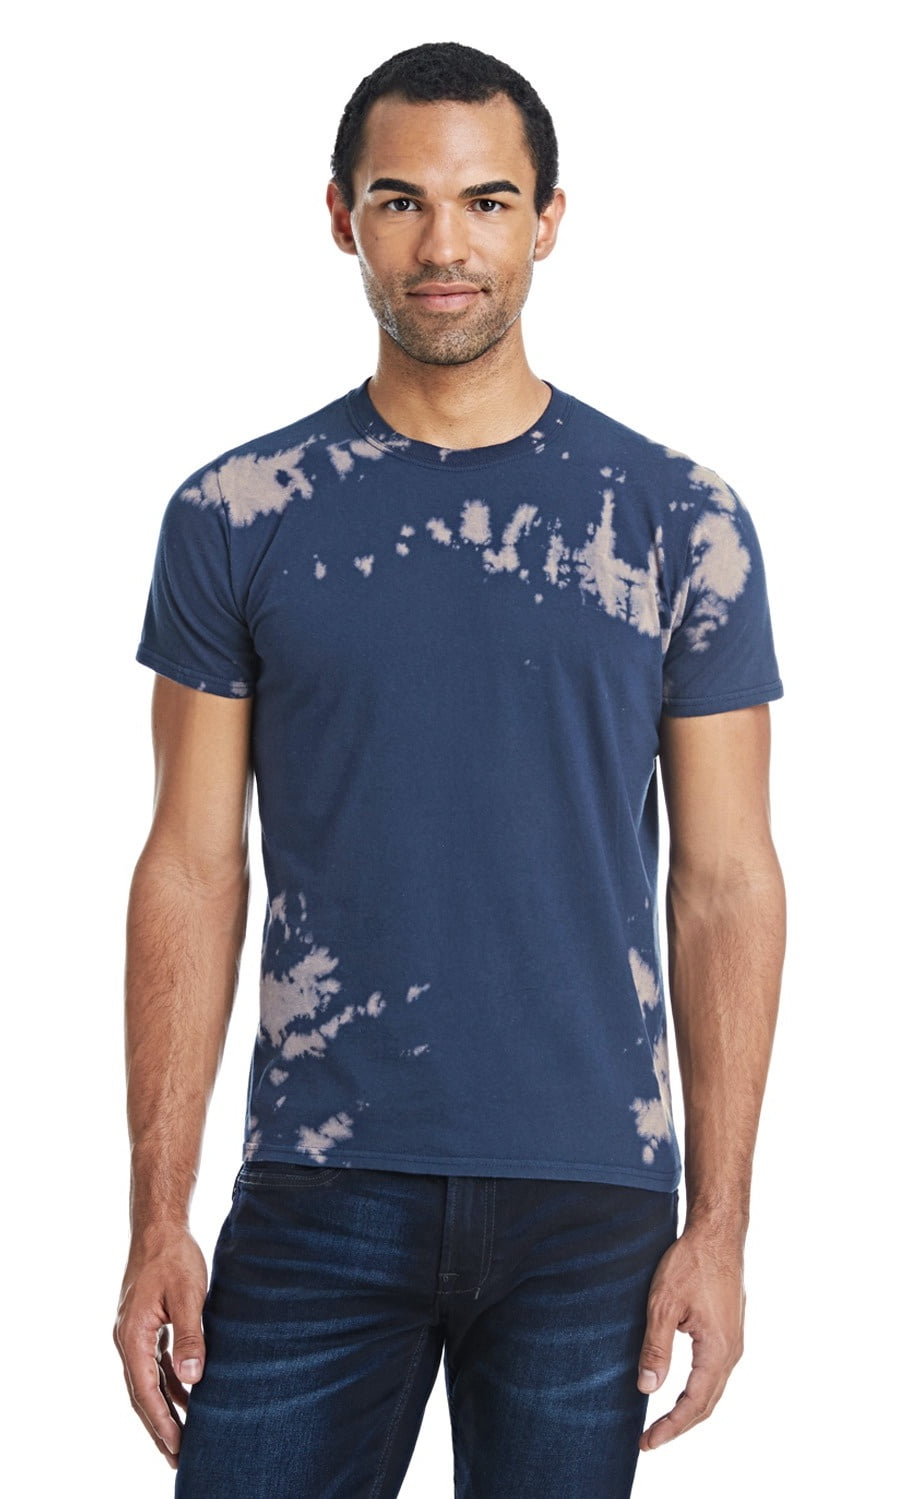 Tie-Dye - Tie-Dye Bleach Out T-Shirt - NAVY - 3XL - Walmart.com ...